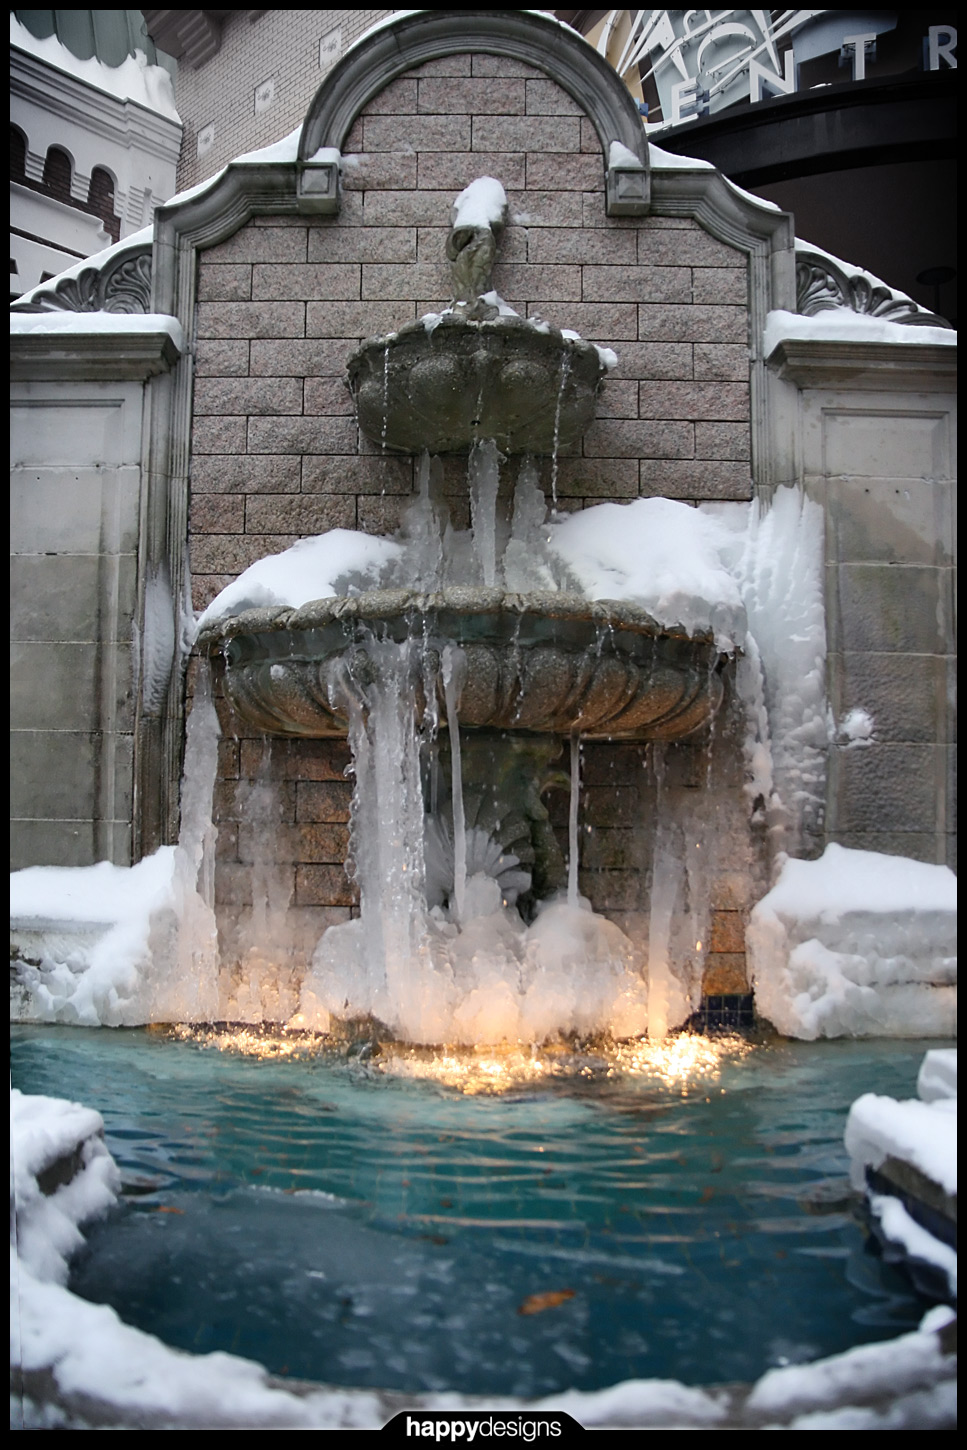 20081230 - winter - frozen fountain